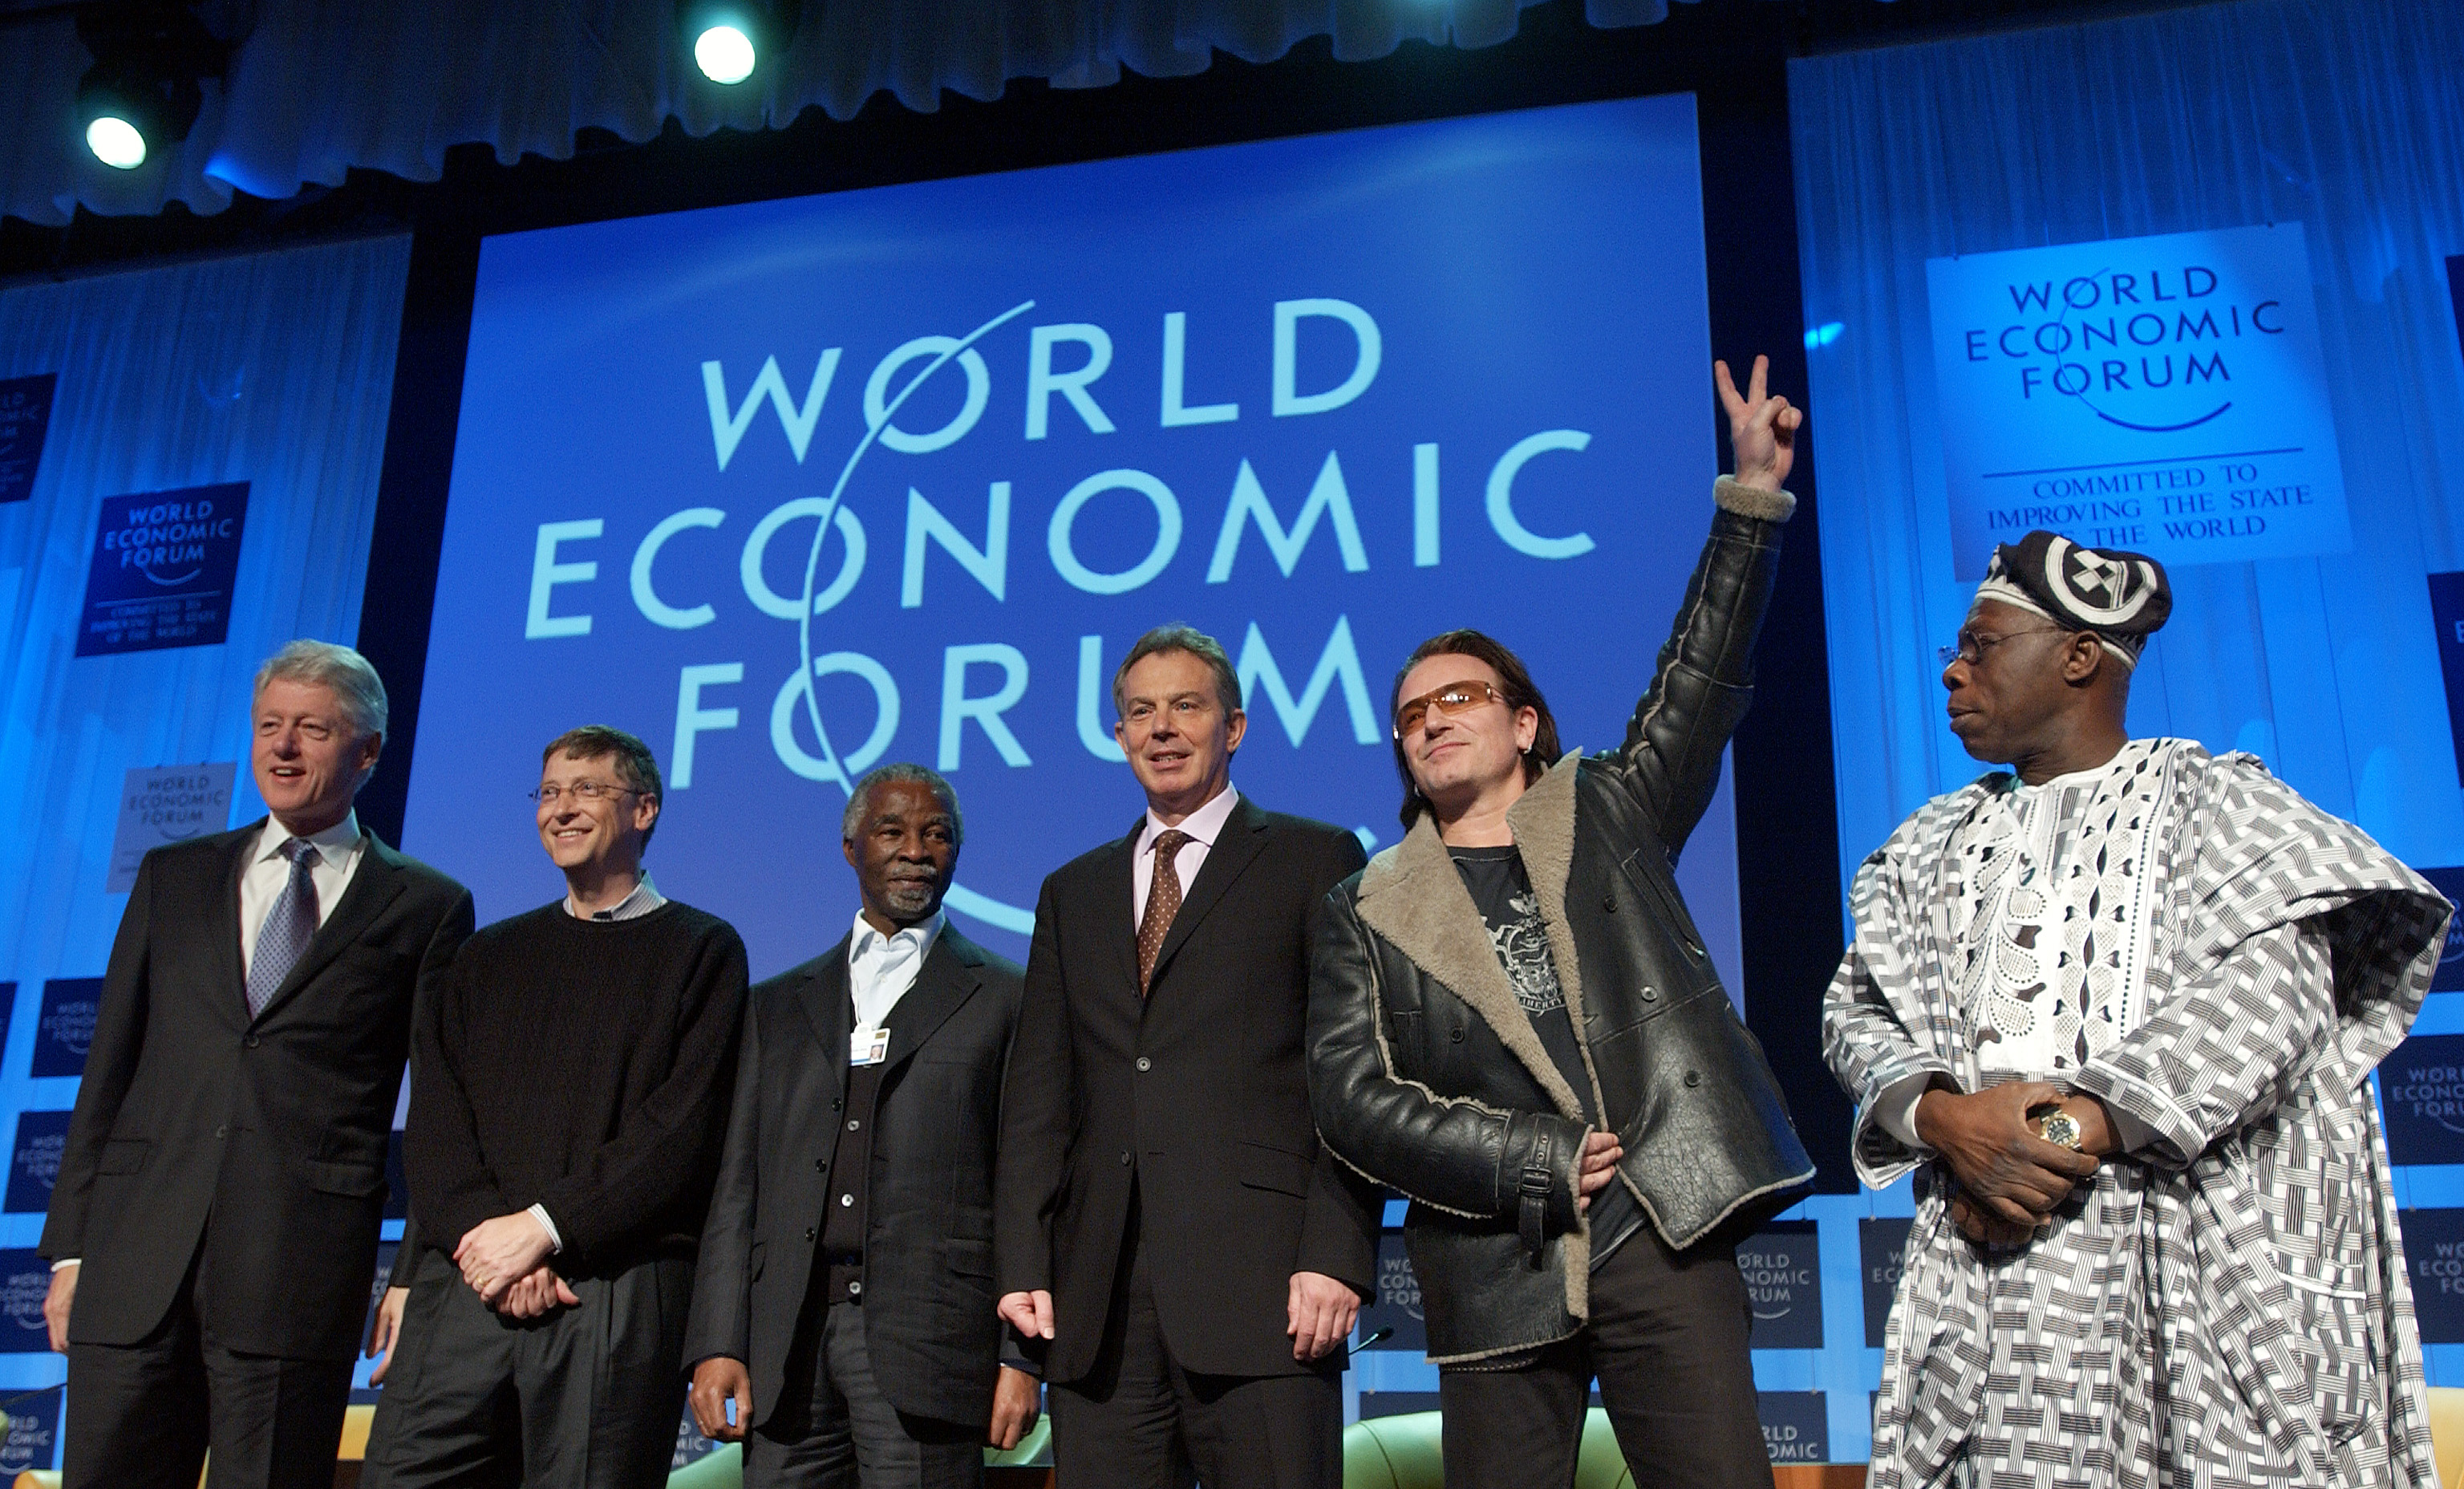 World Economic Forum swiss-image.ch/Photo by Remy Steinegger